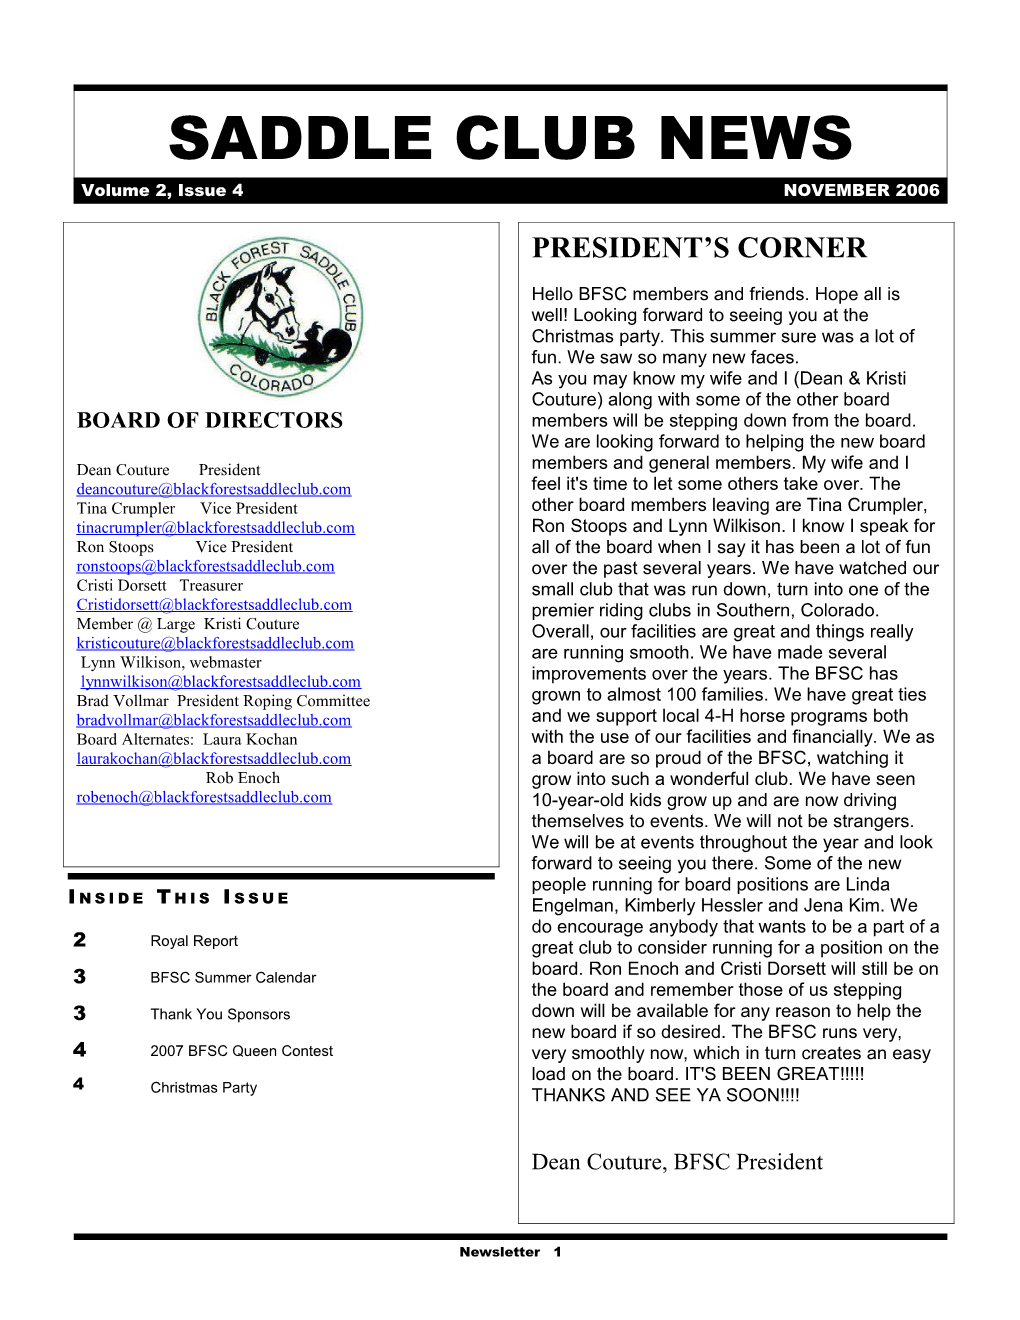 Saddle Club News